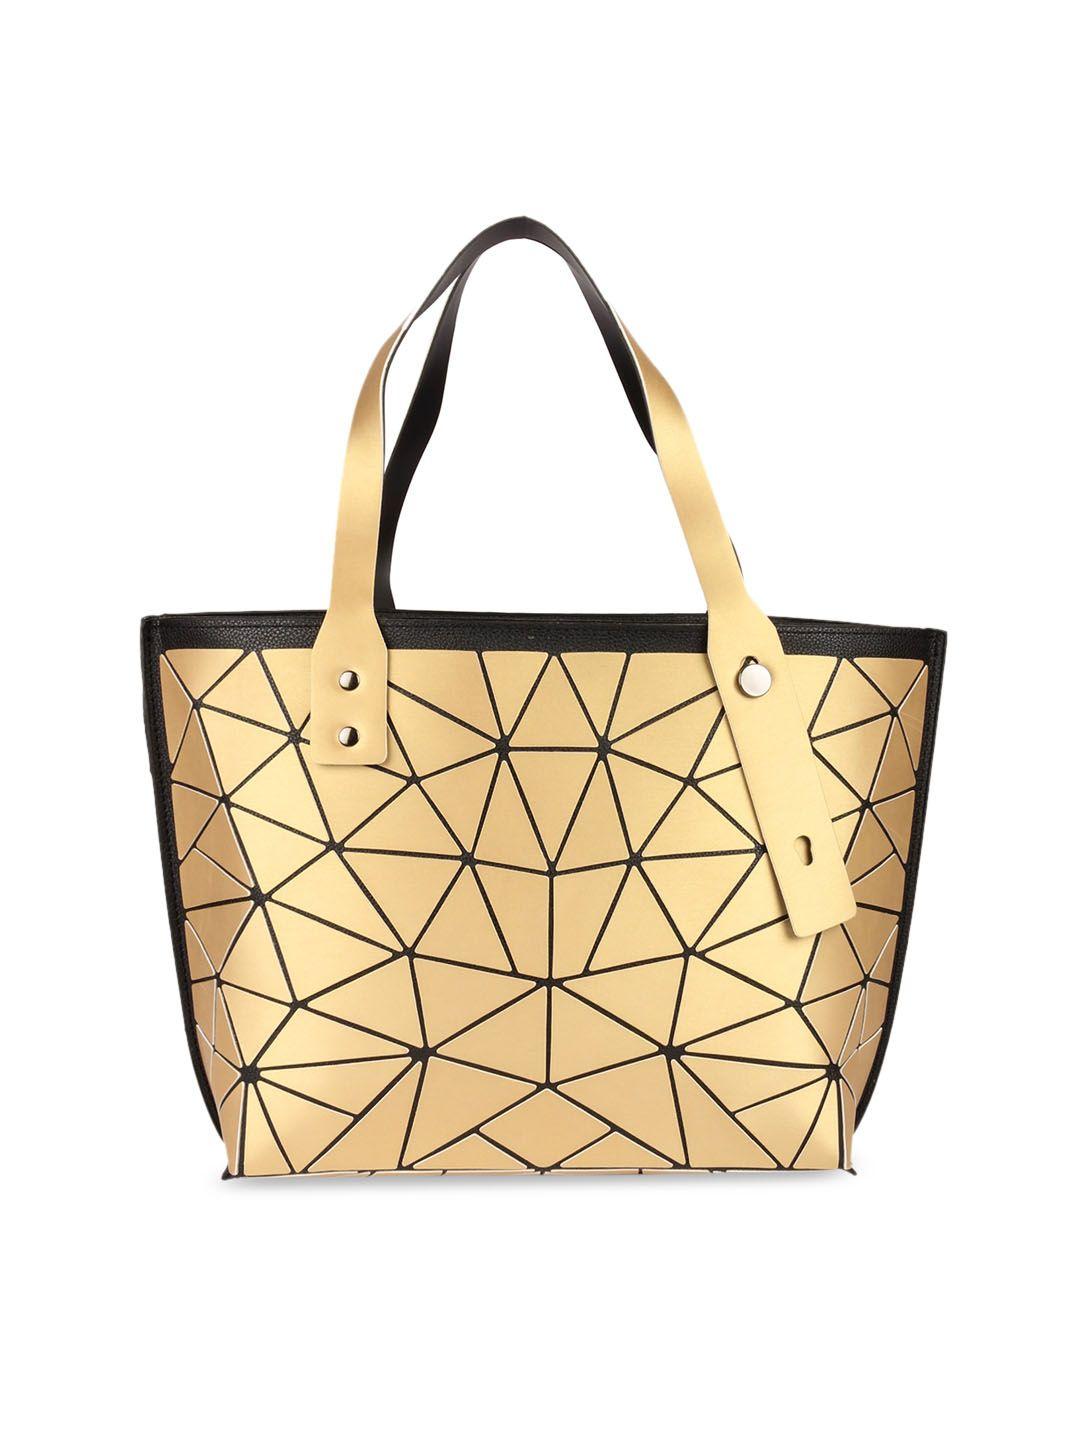 baomi geometric tote range yellow gold color soft one size handbag